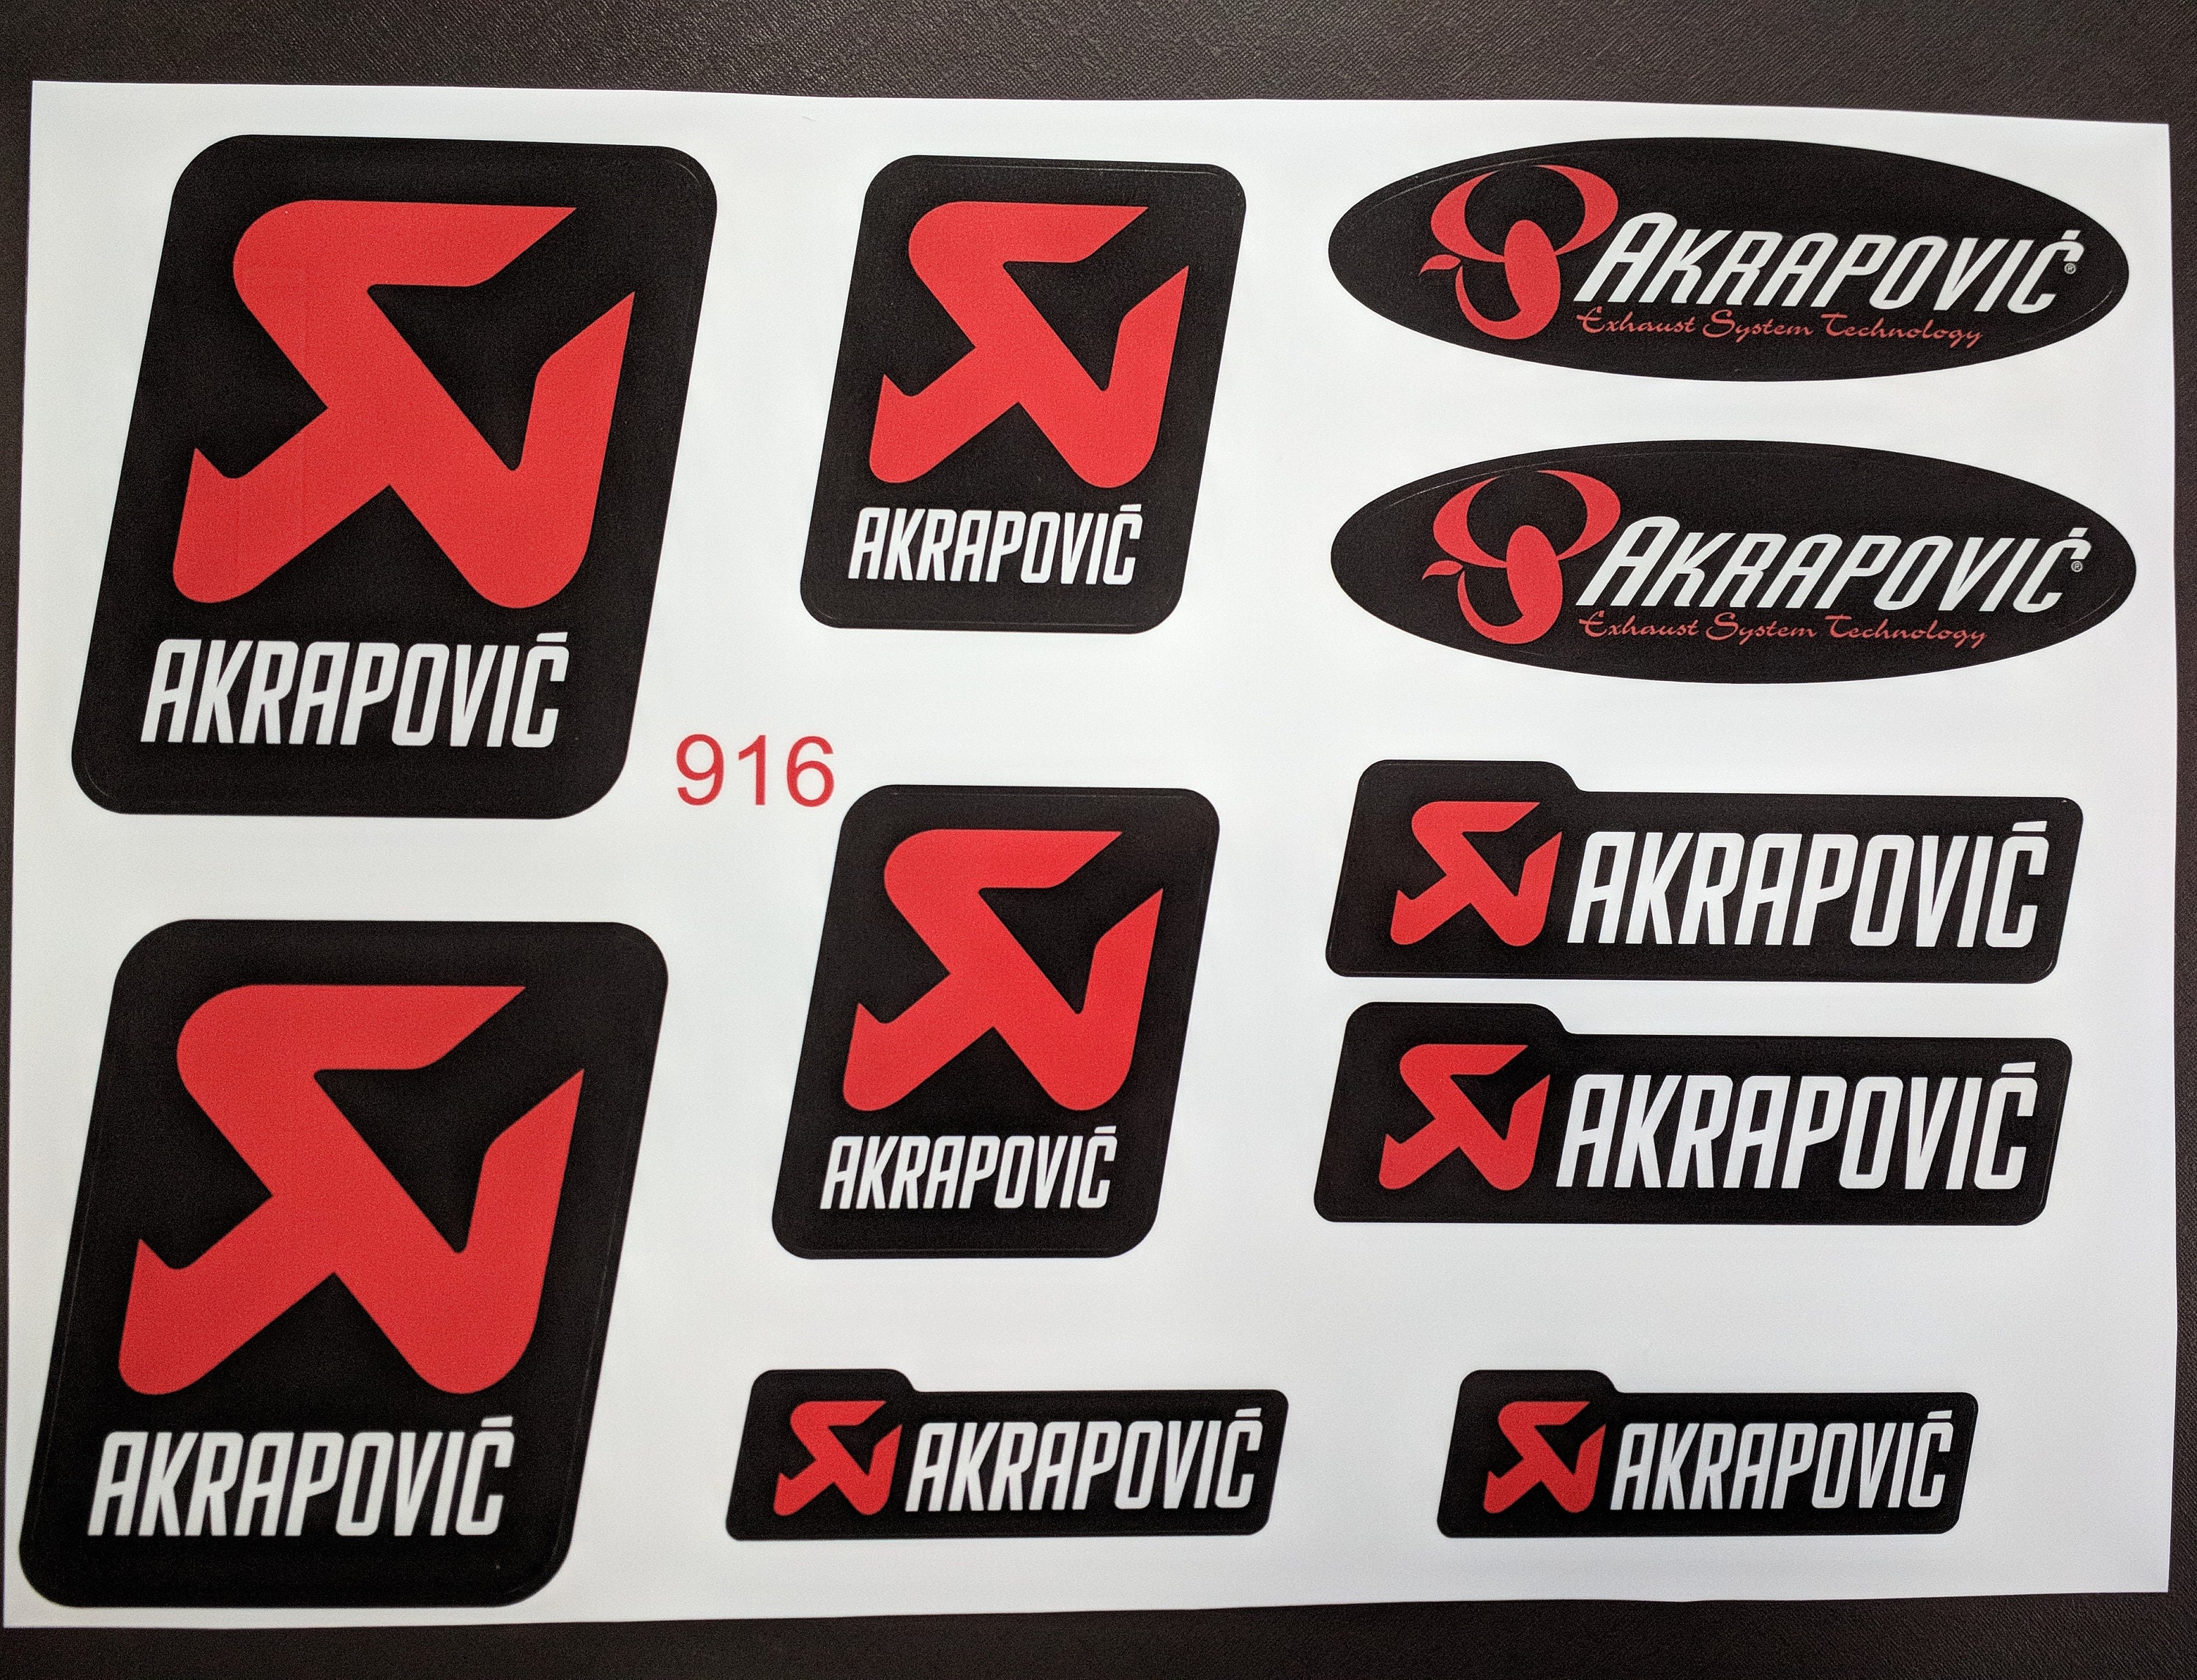 AKRAPOVIC BIKE EXHAUST SYSTEM Sticker for Sale by shahrone